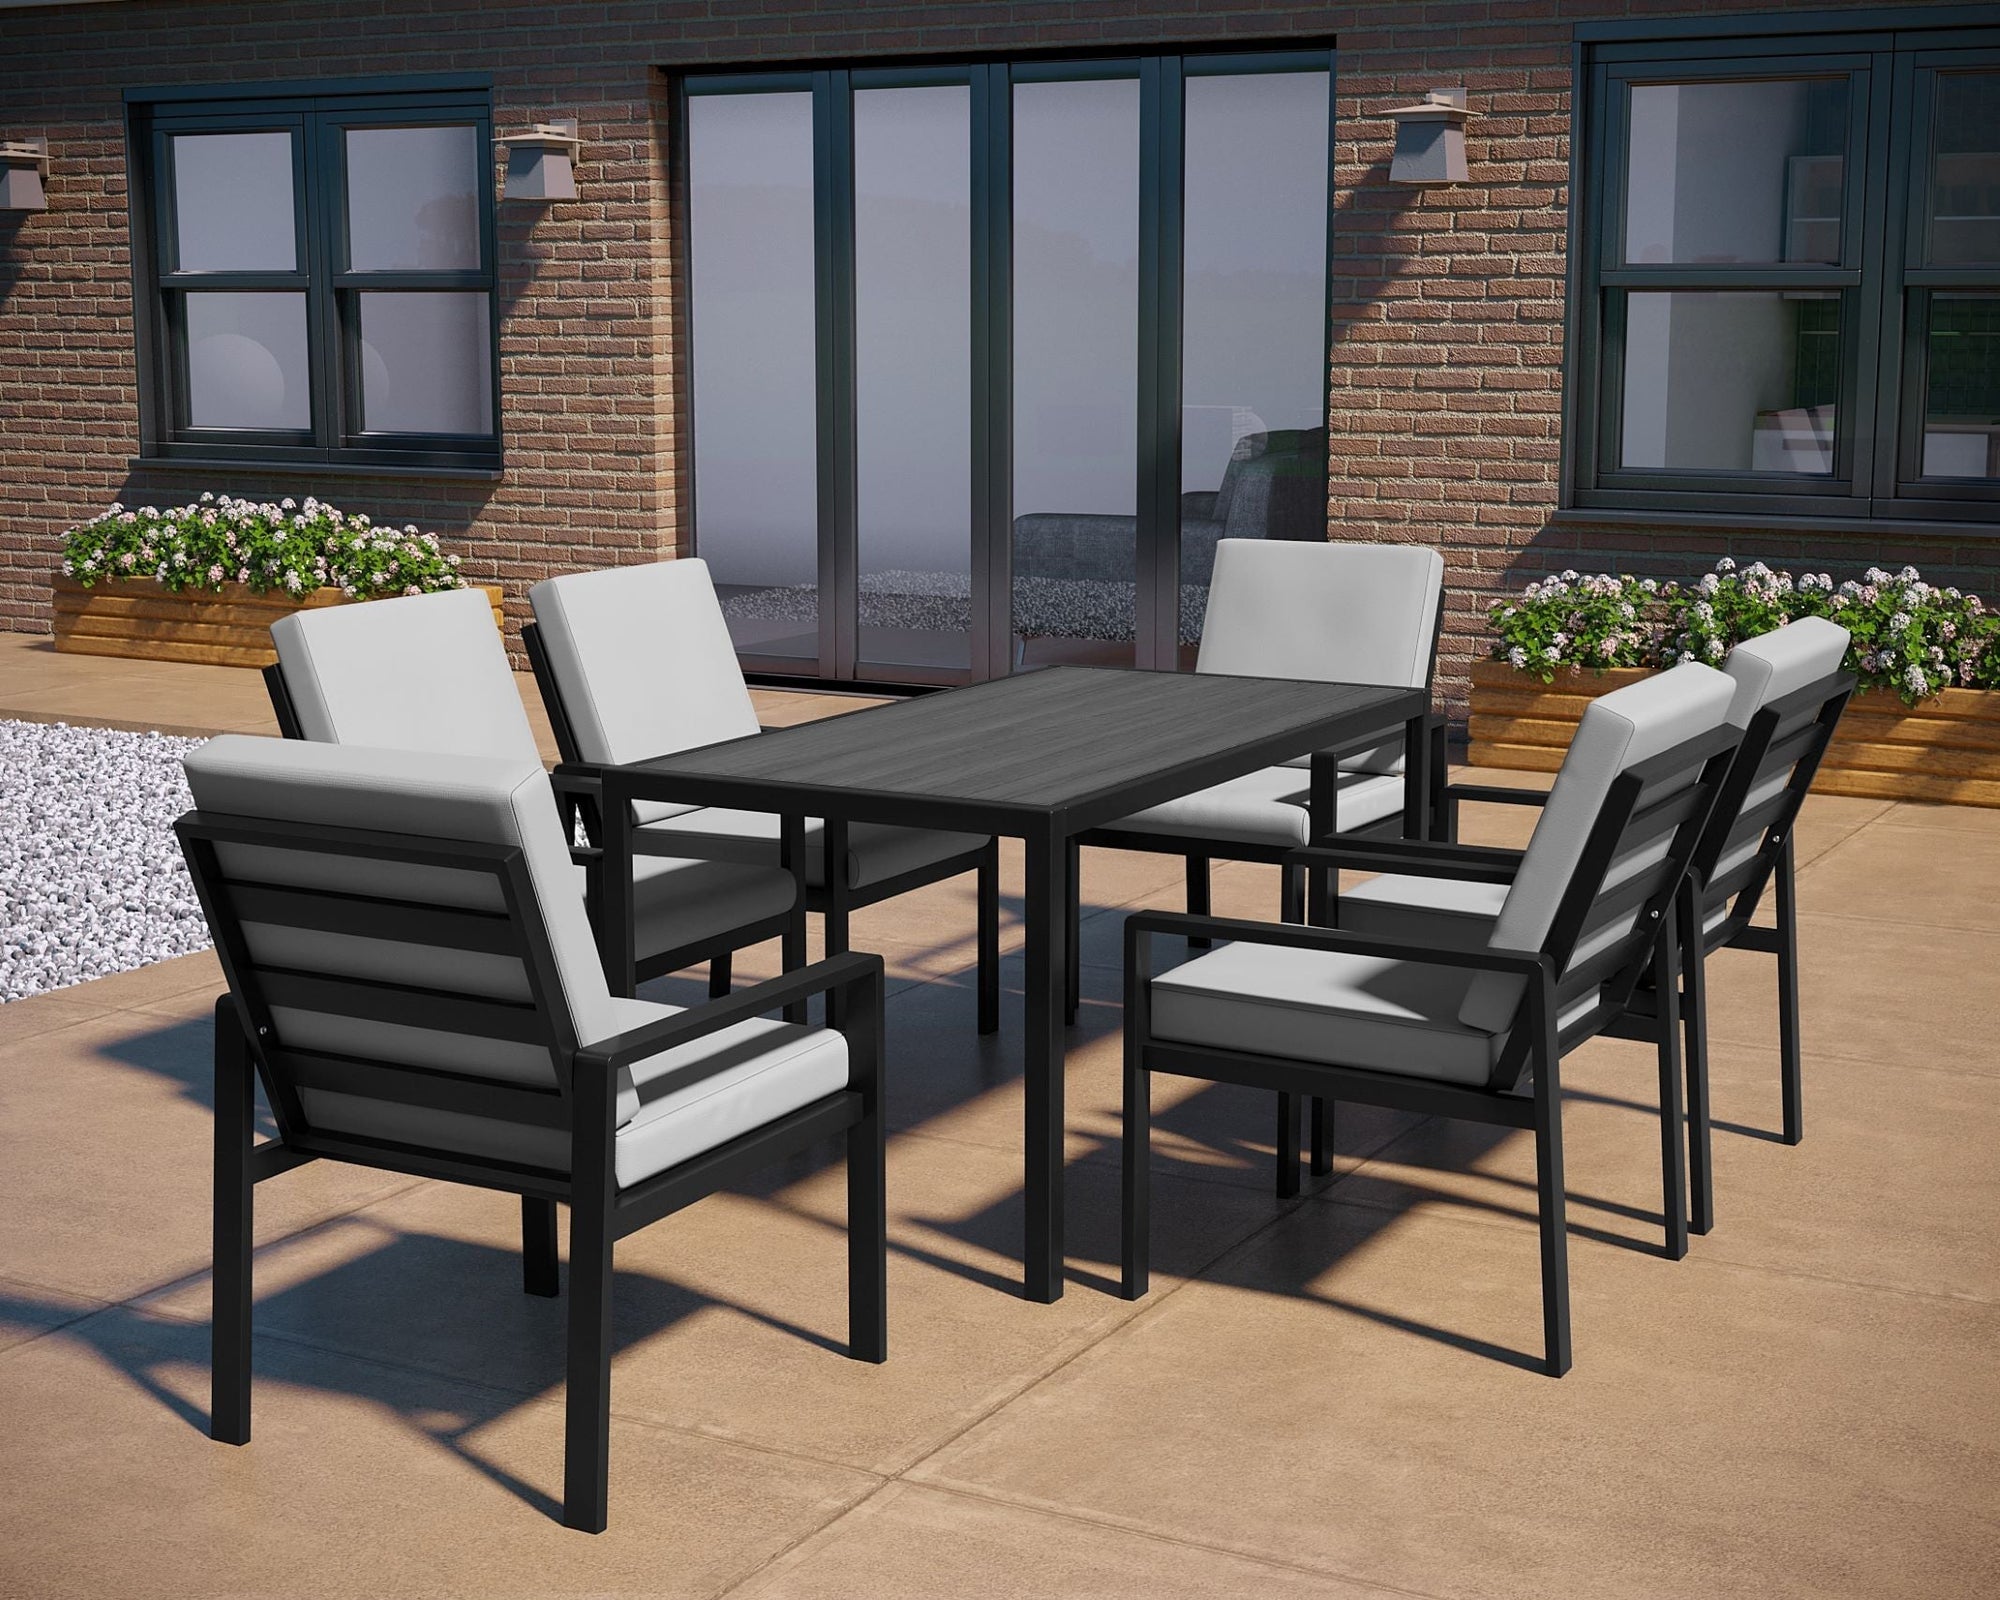 Aluminium Dining Table & 6 Chairs Set - Black / Light Grey Rattan Furniture MaxiFurn 